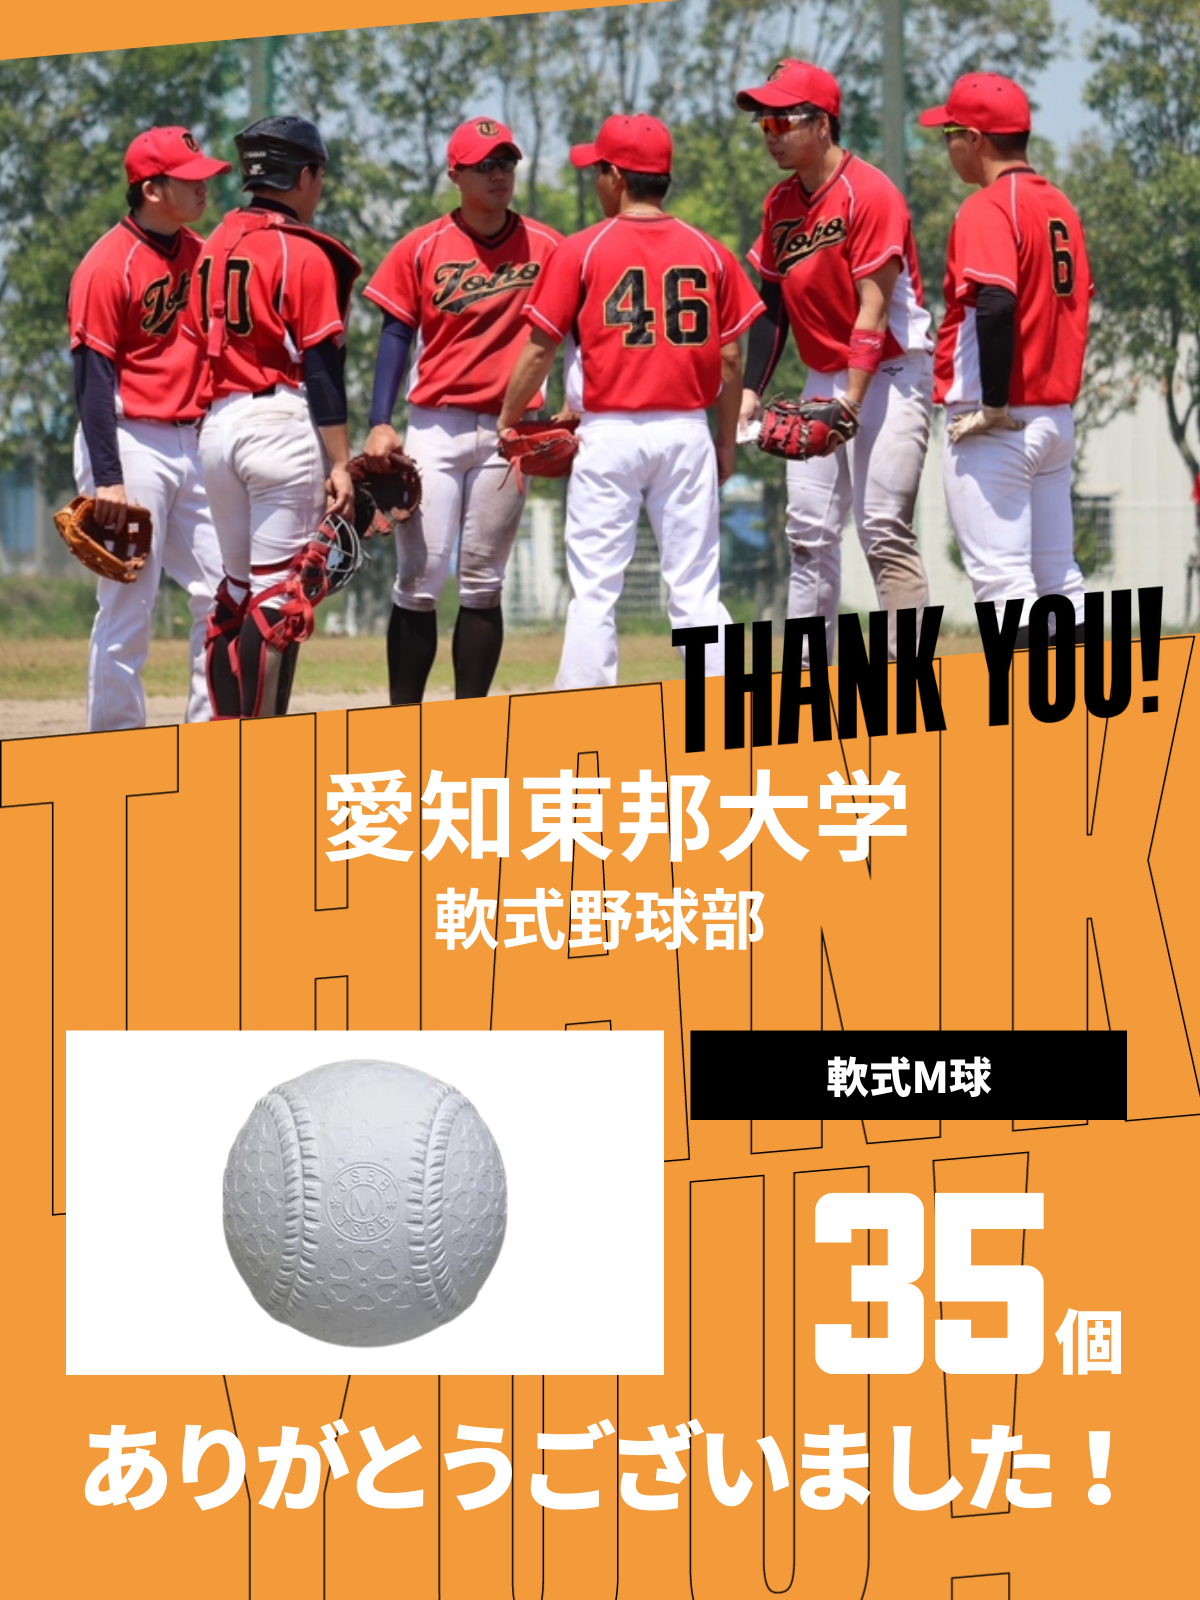 CHEER UP! for 愛知東邦大学　軟式野球部